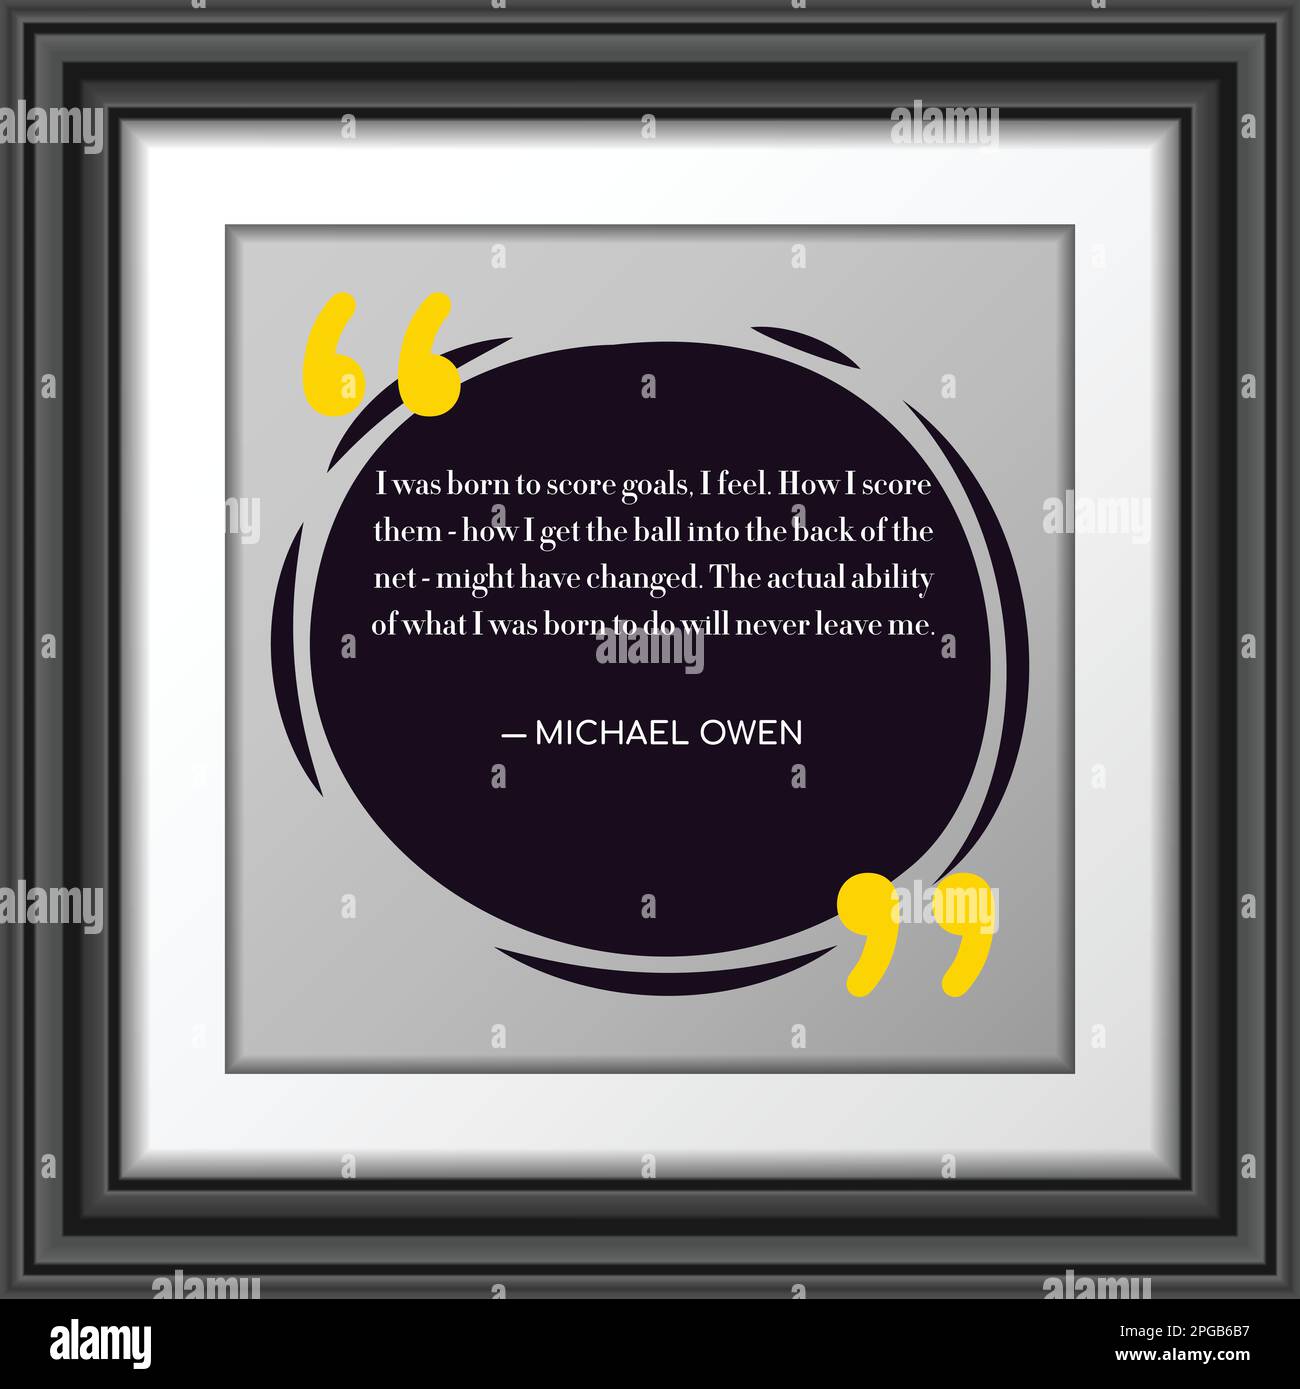 Michael Owen Quotes for Inspiration and Motivation - Michael Owen